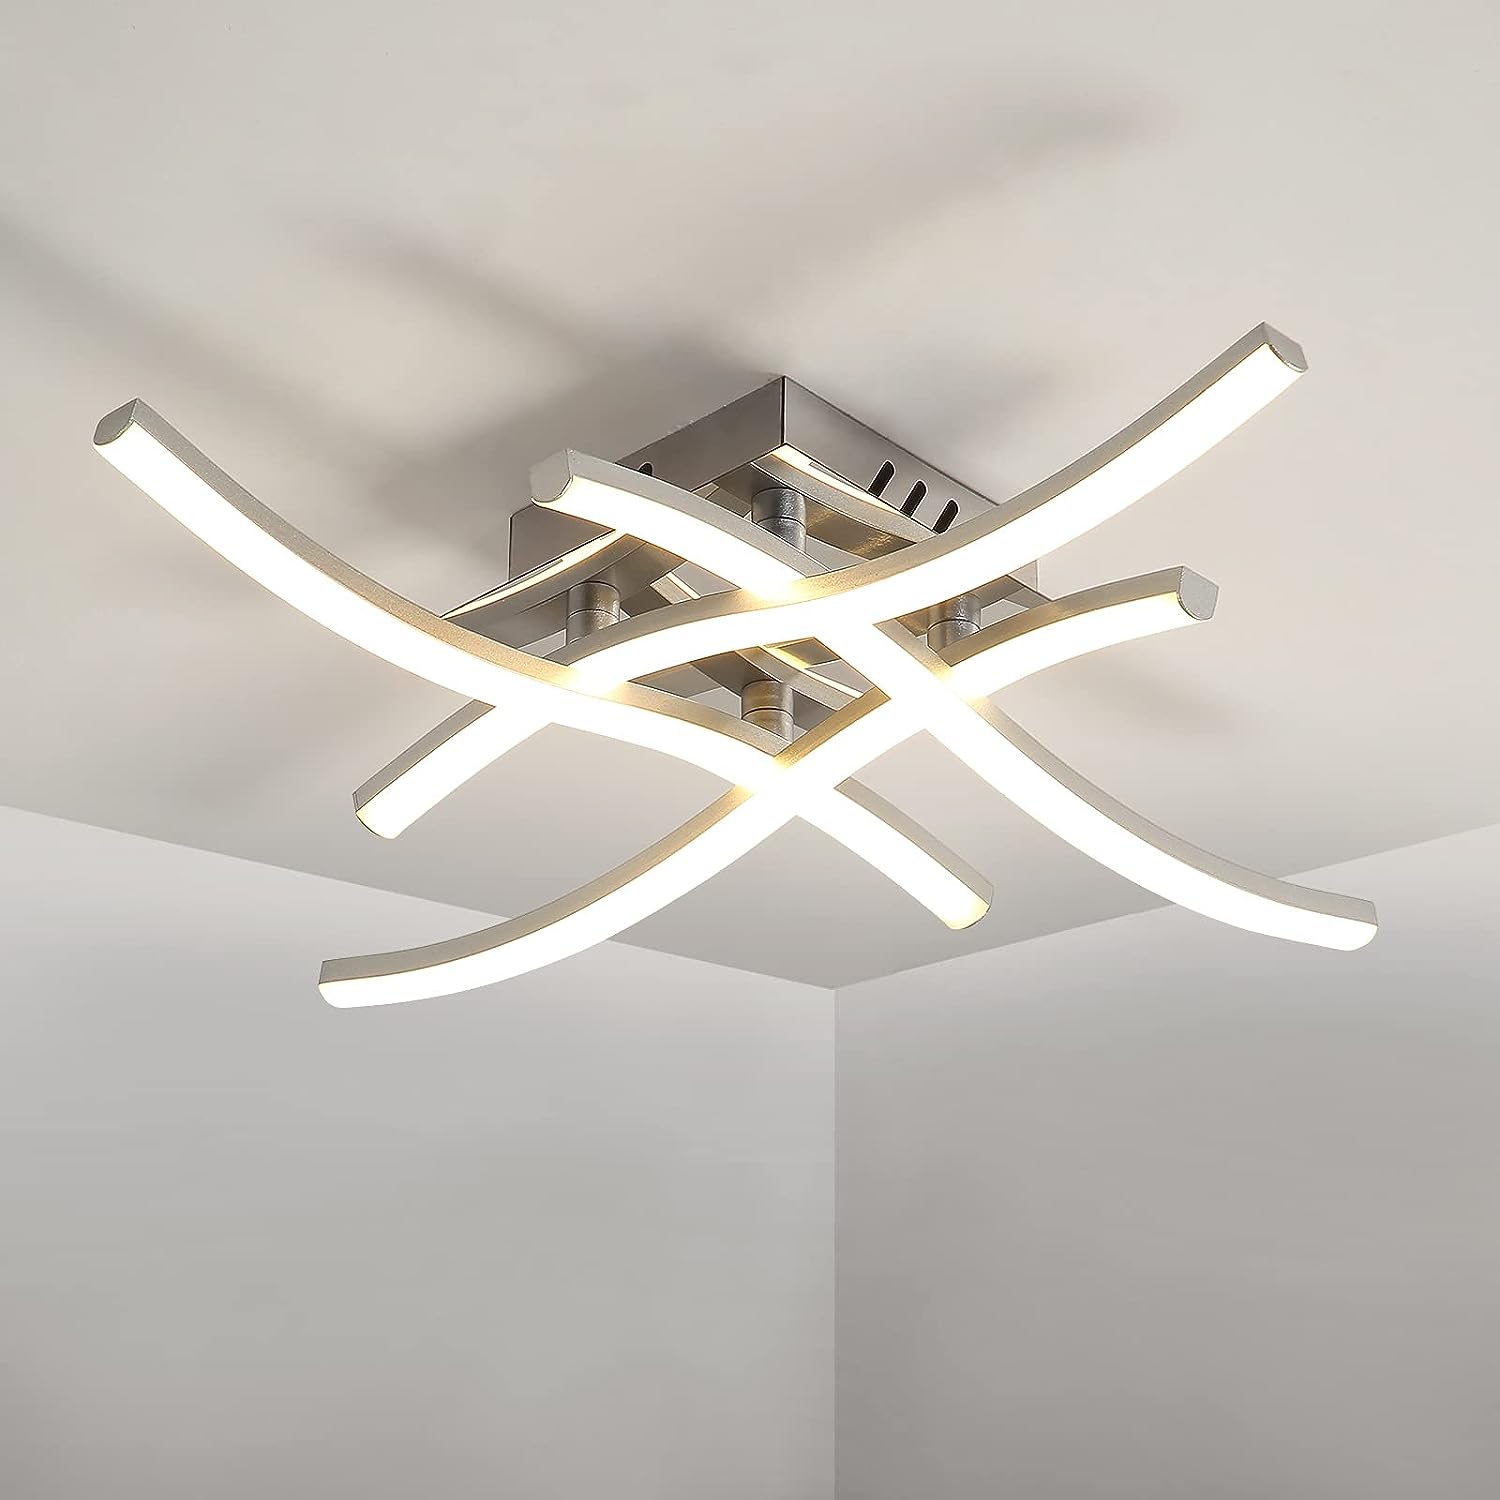 Goeco - Plafonnier LED Dimmable, Luminaire Plafonnier Salon